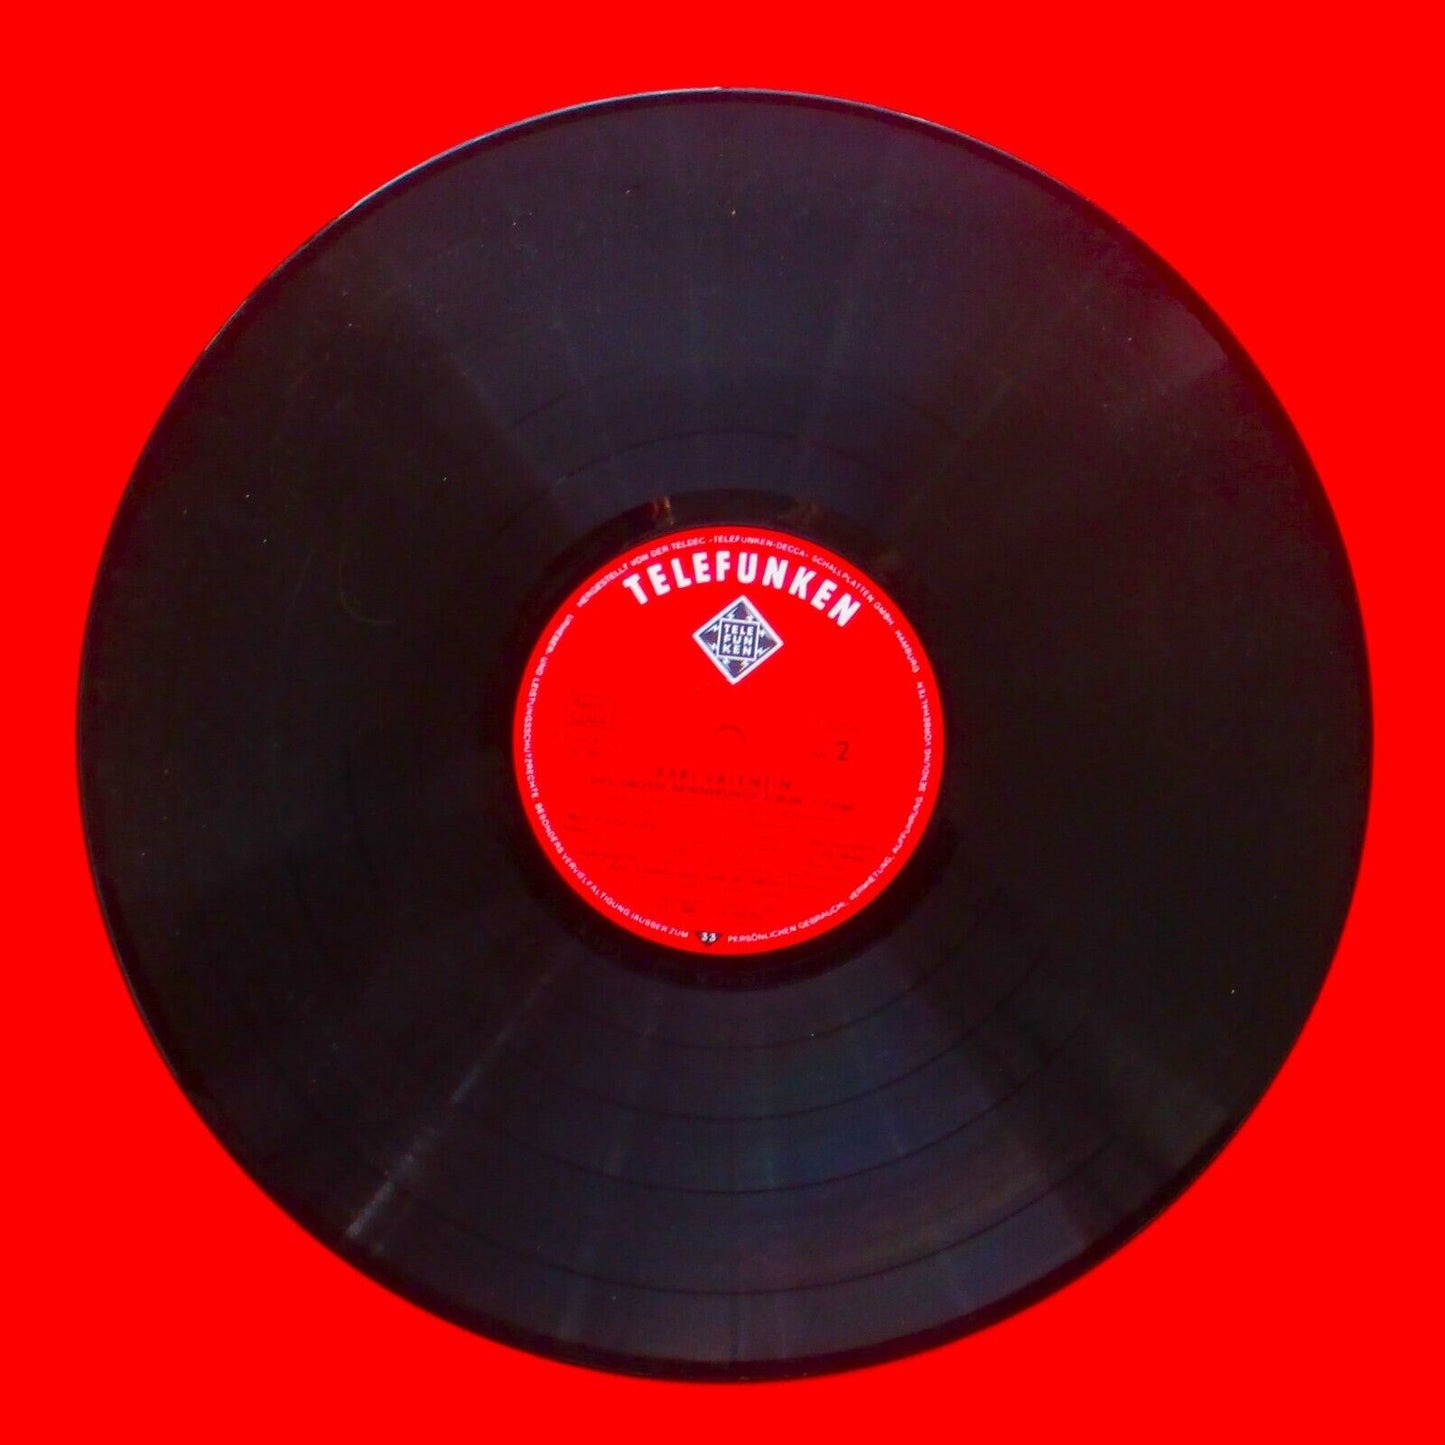 Karl Valentin ‎The Great Memory Album 2nd Episode Double Vinyl LP 1972